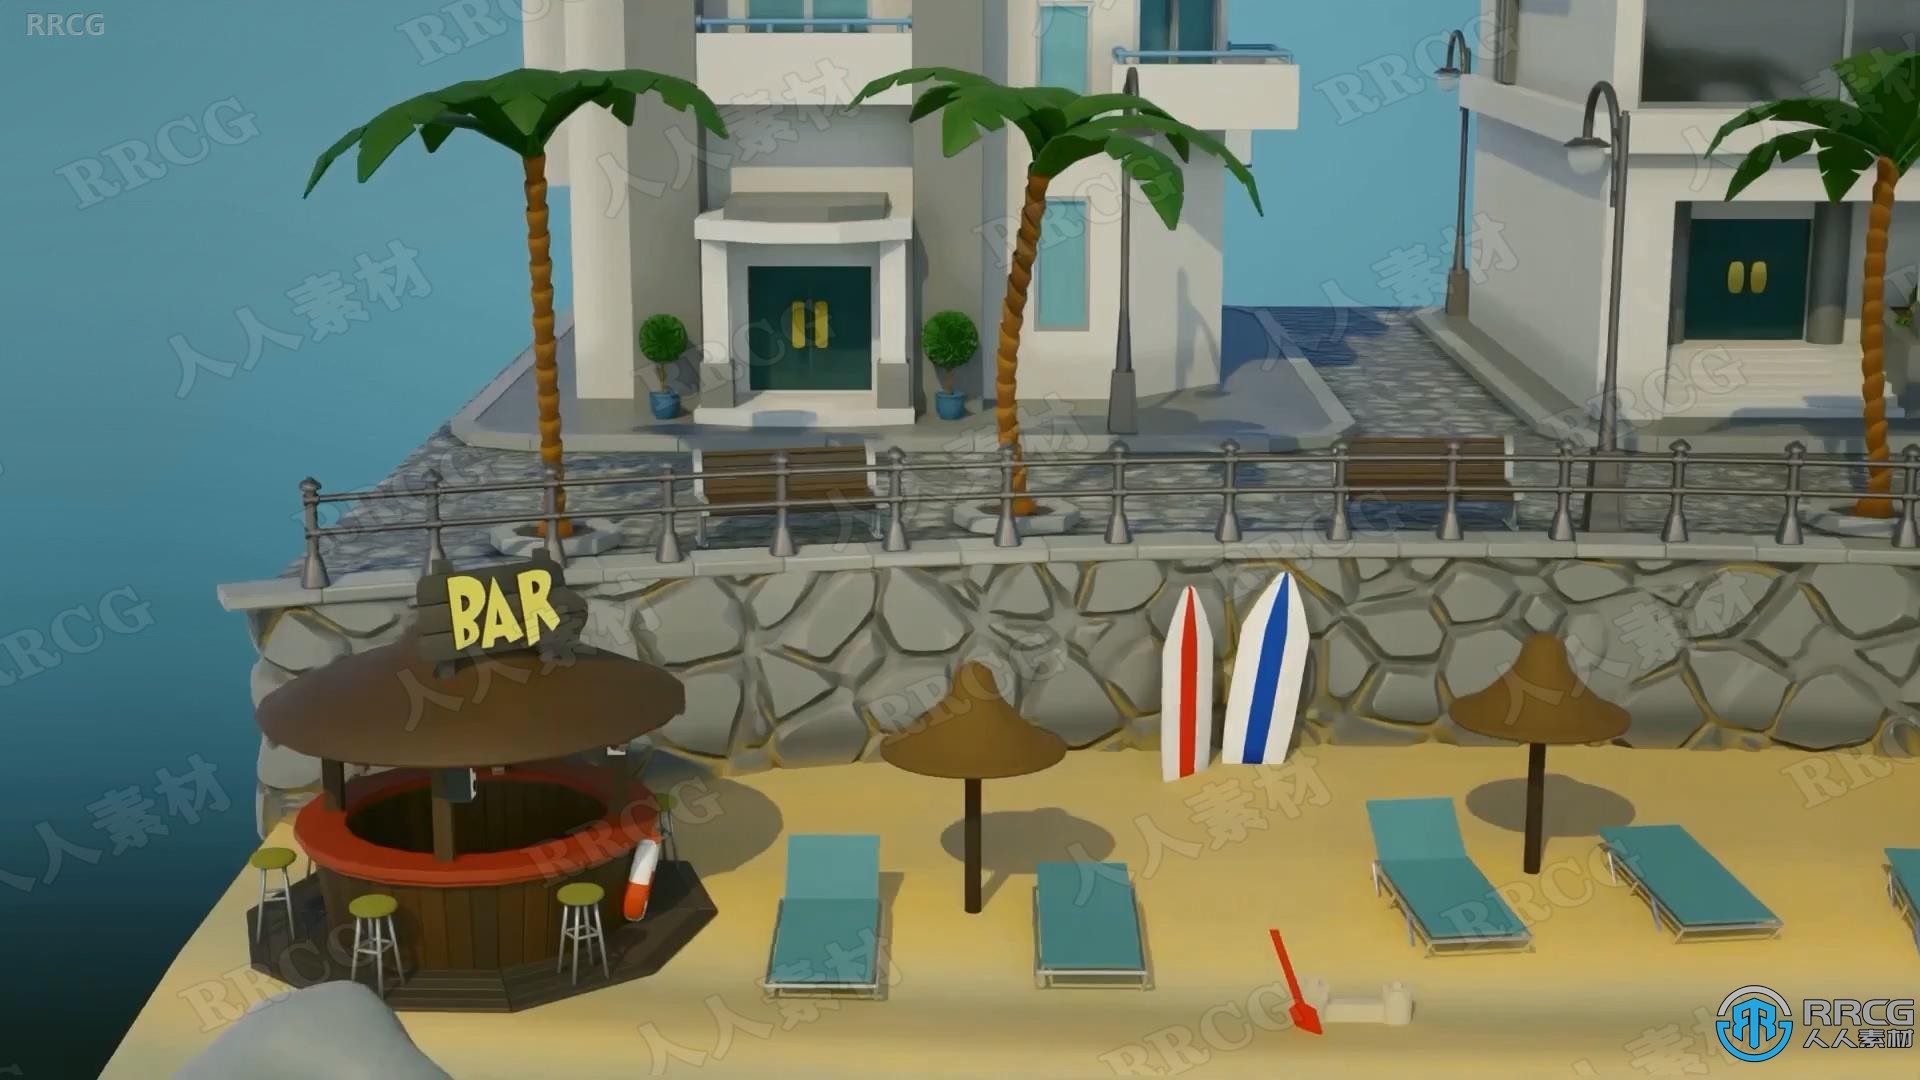 Blender热带酒店度假村场景完整制作流程视频教程